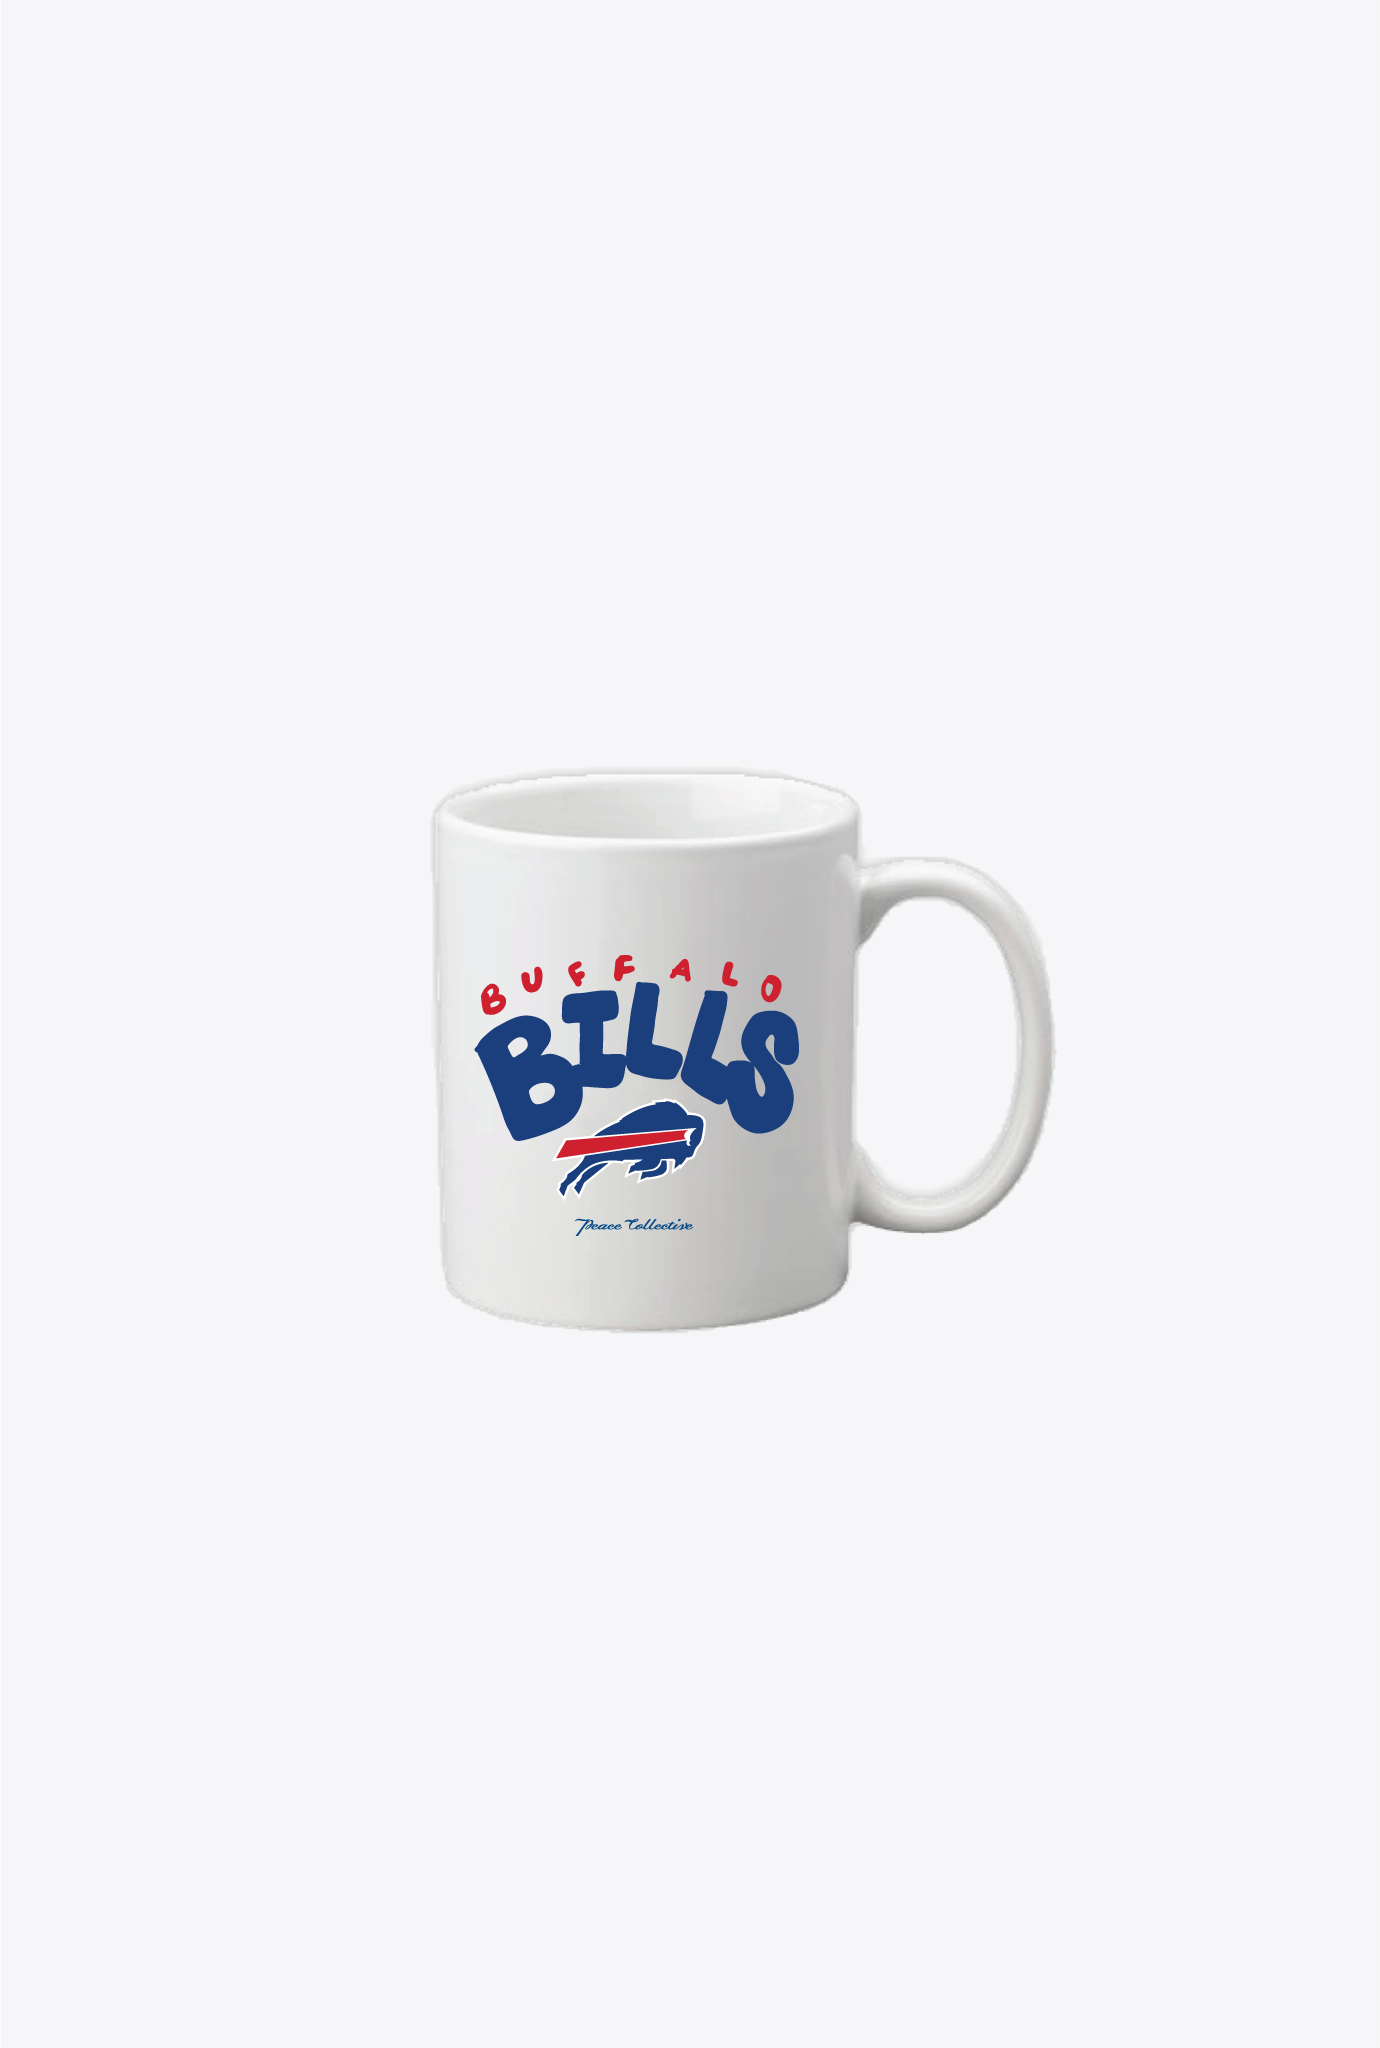 Buffalo Bills Mug - White